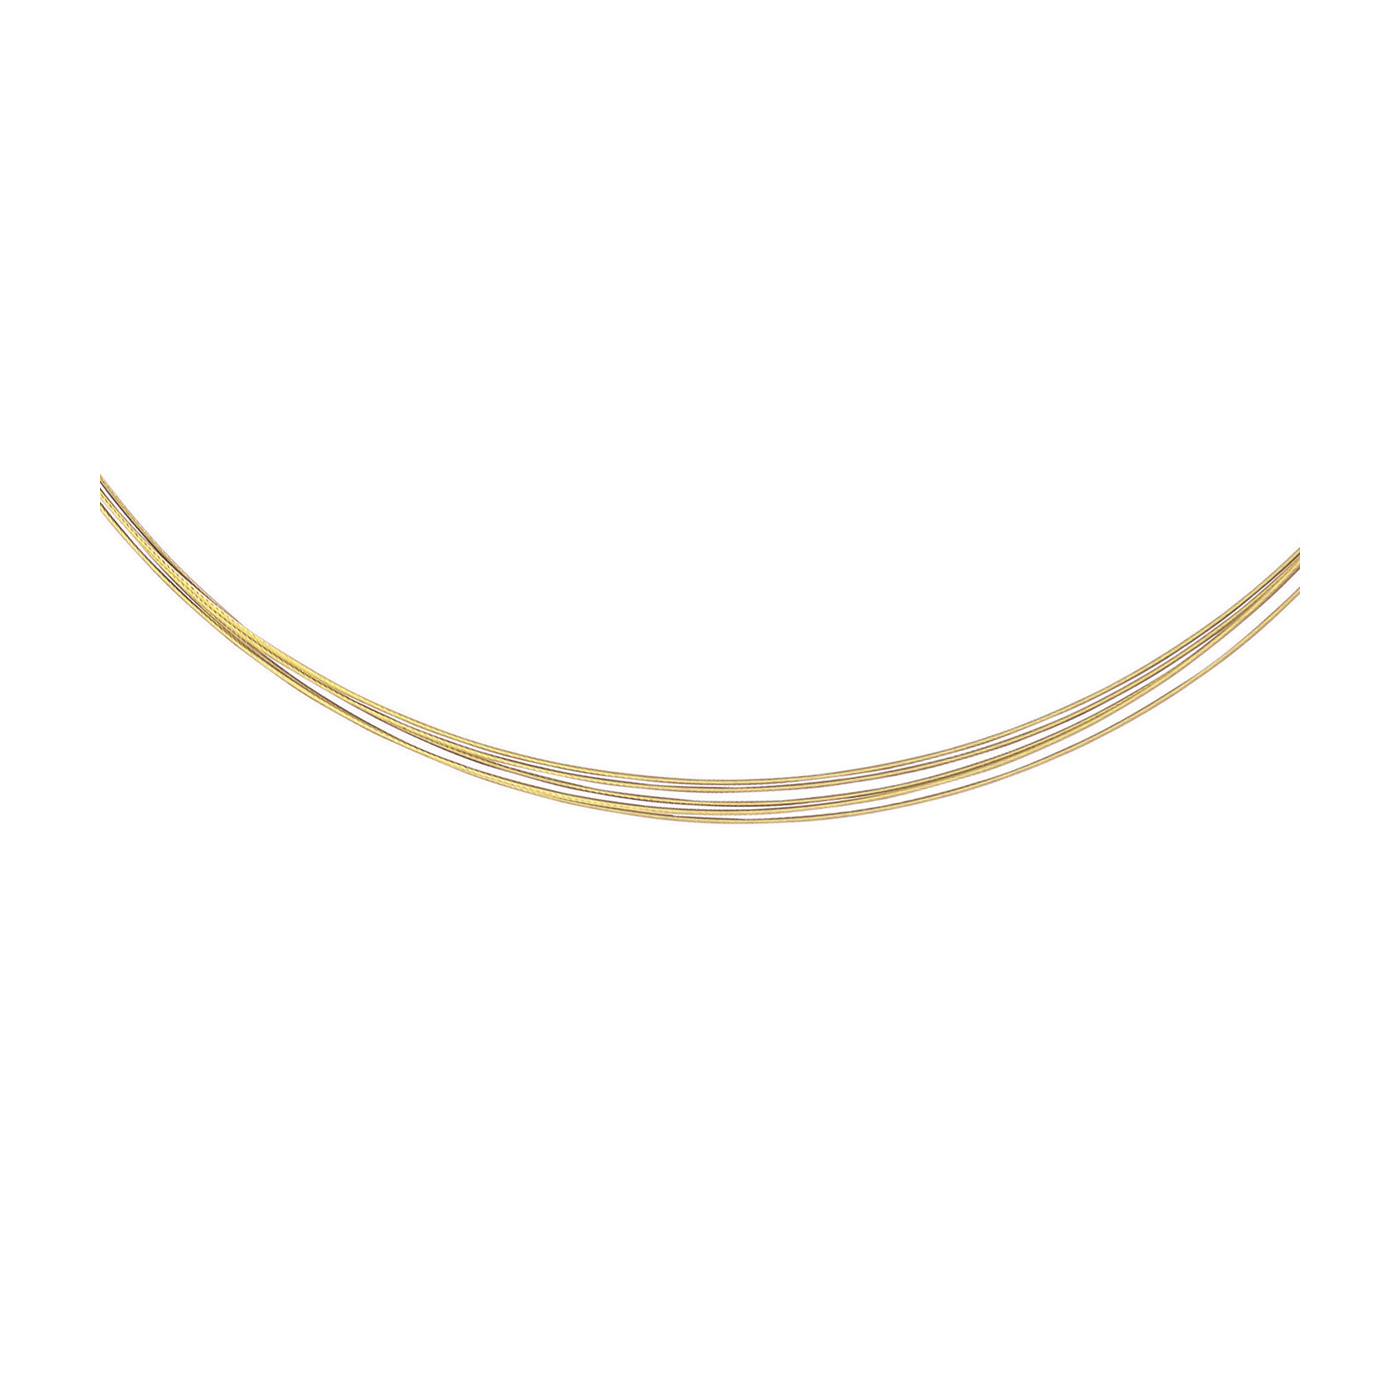 Rope Necklace, Golden Metallic, 5 Rows, 42 cm - 1 piece